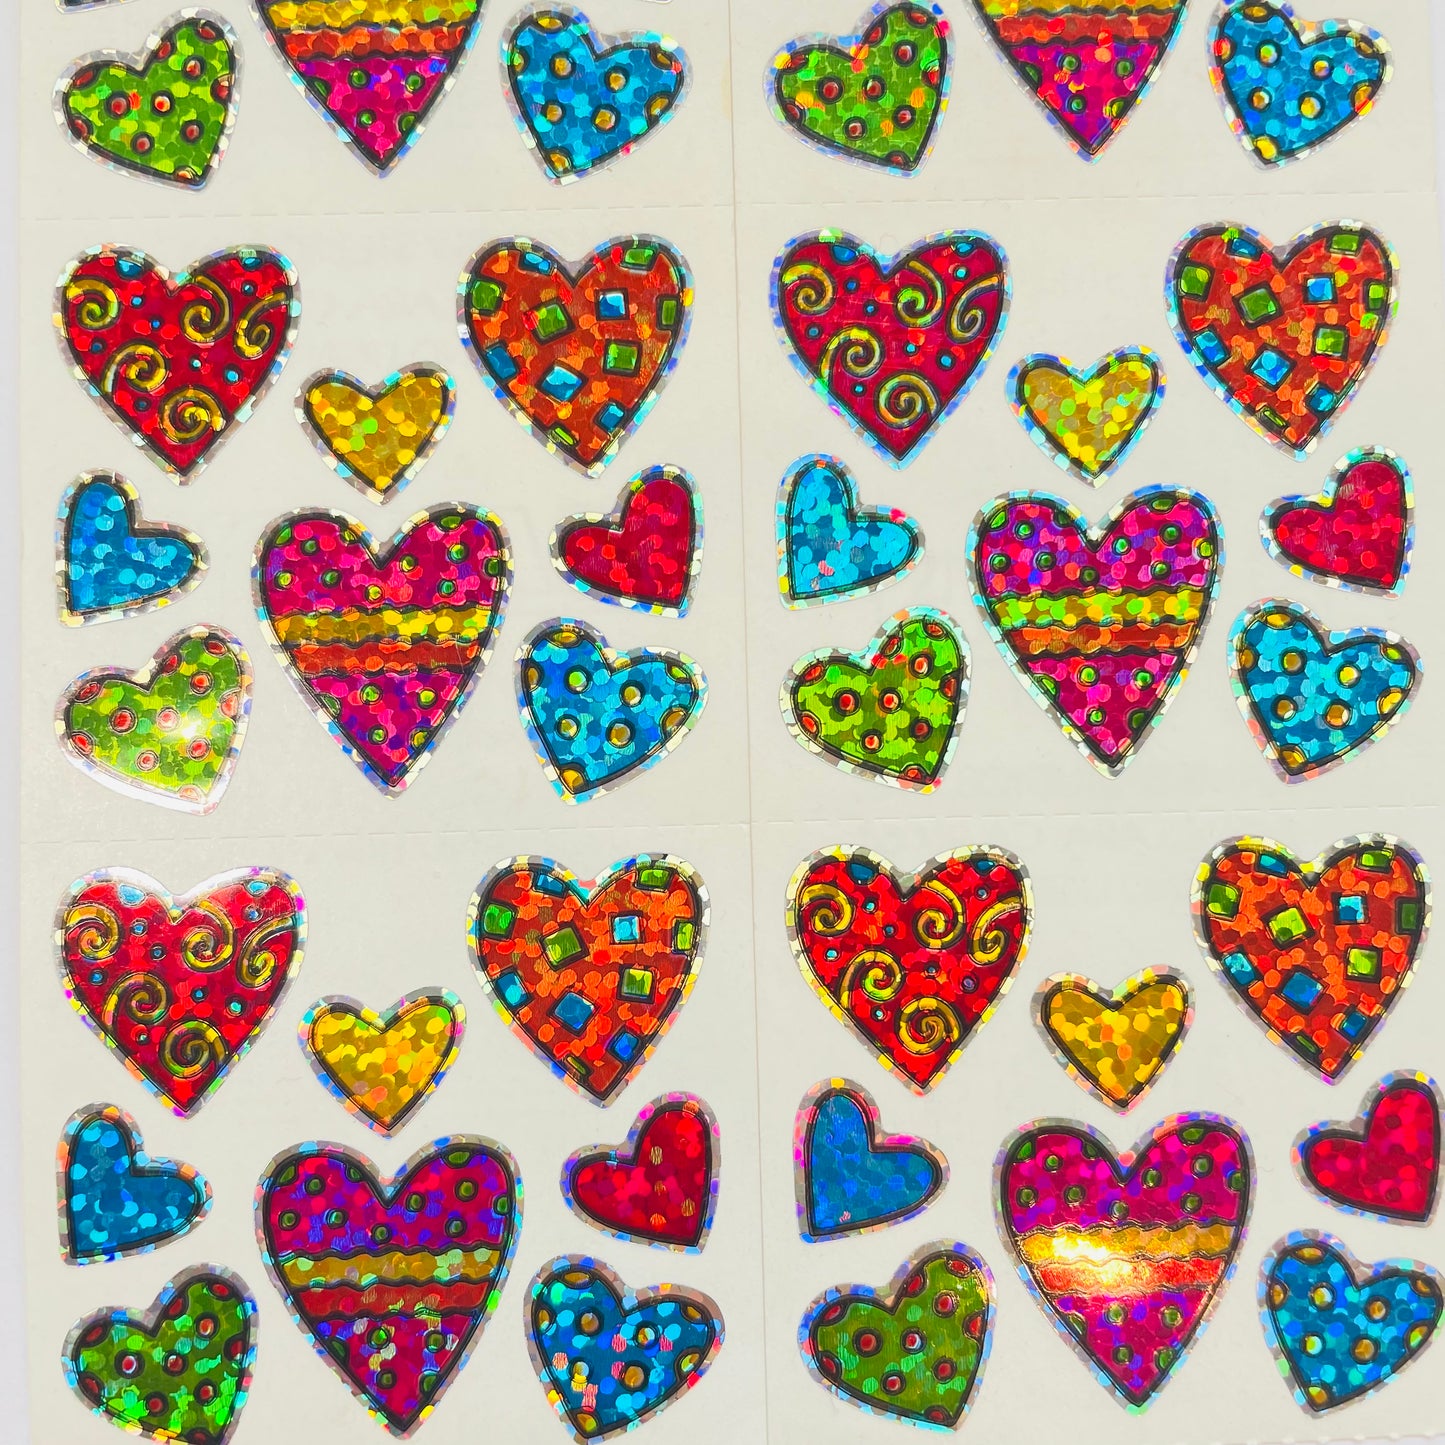 HAMBLY: Patterned Heart glitter stickers